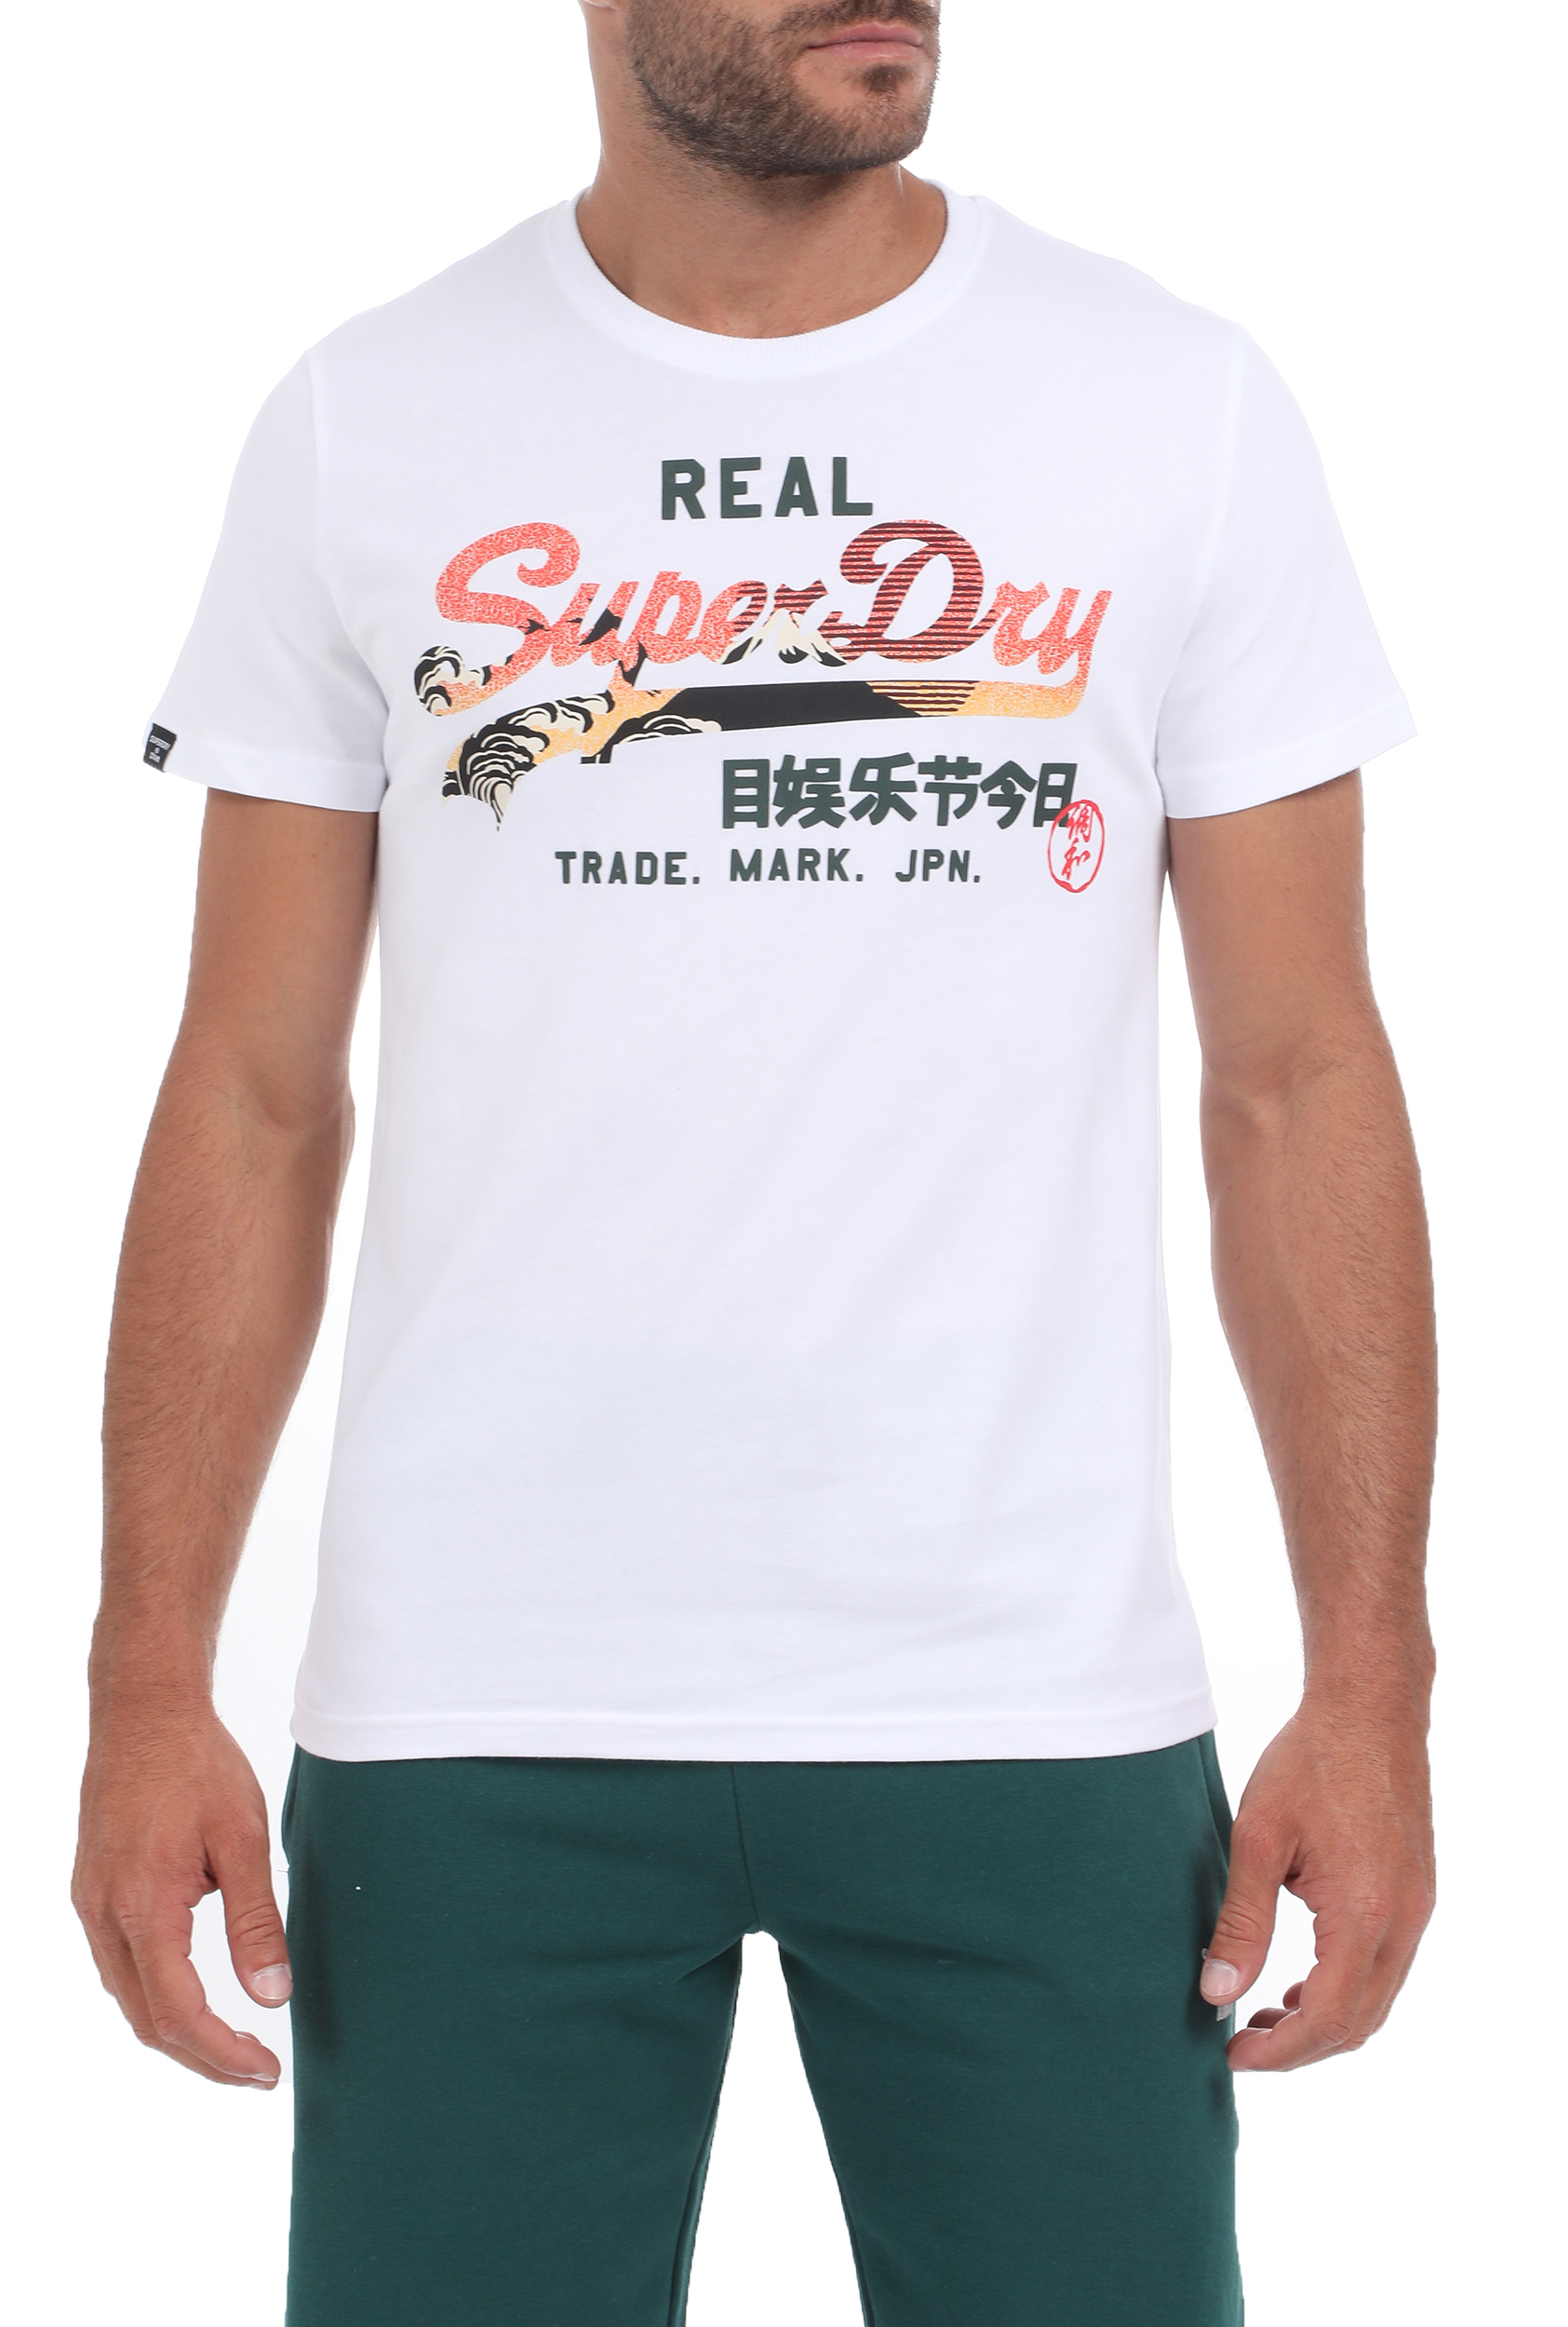 SUPERDRY – Ανδρική μπλούζα SUPERDRY VL ITAGO LW λευκή 1809665.0-0004